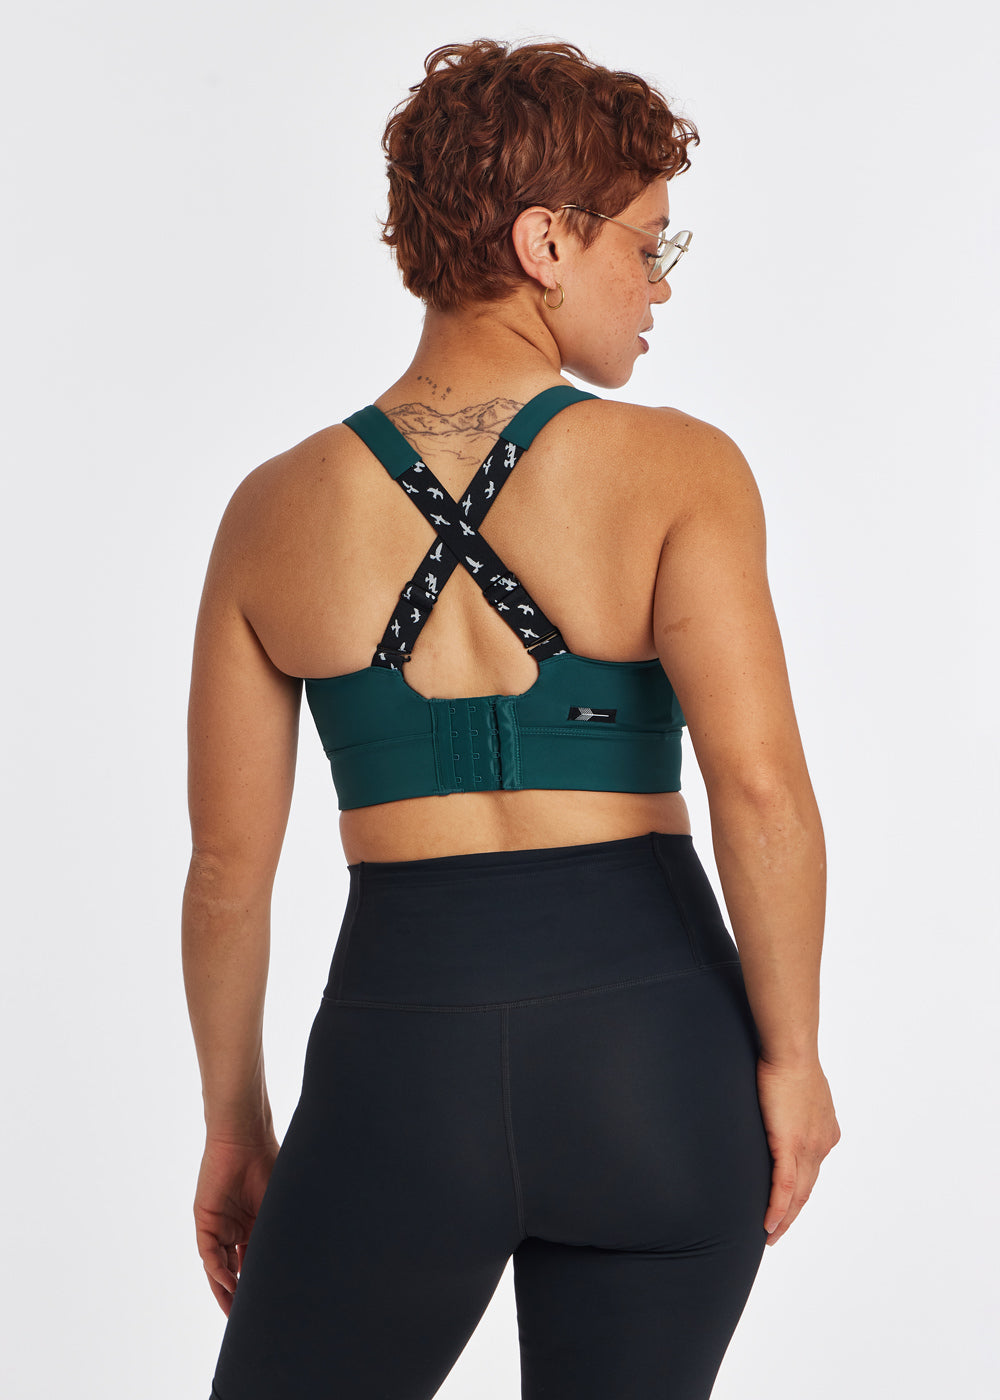 Wholesale off shoulder dress bra For Supportive Underwear 